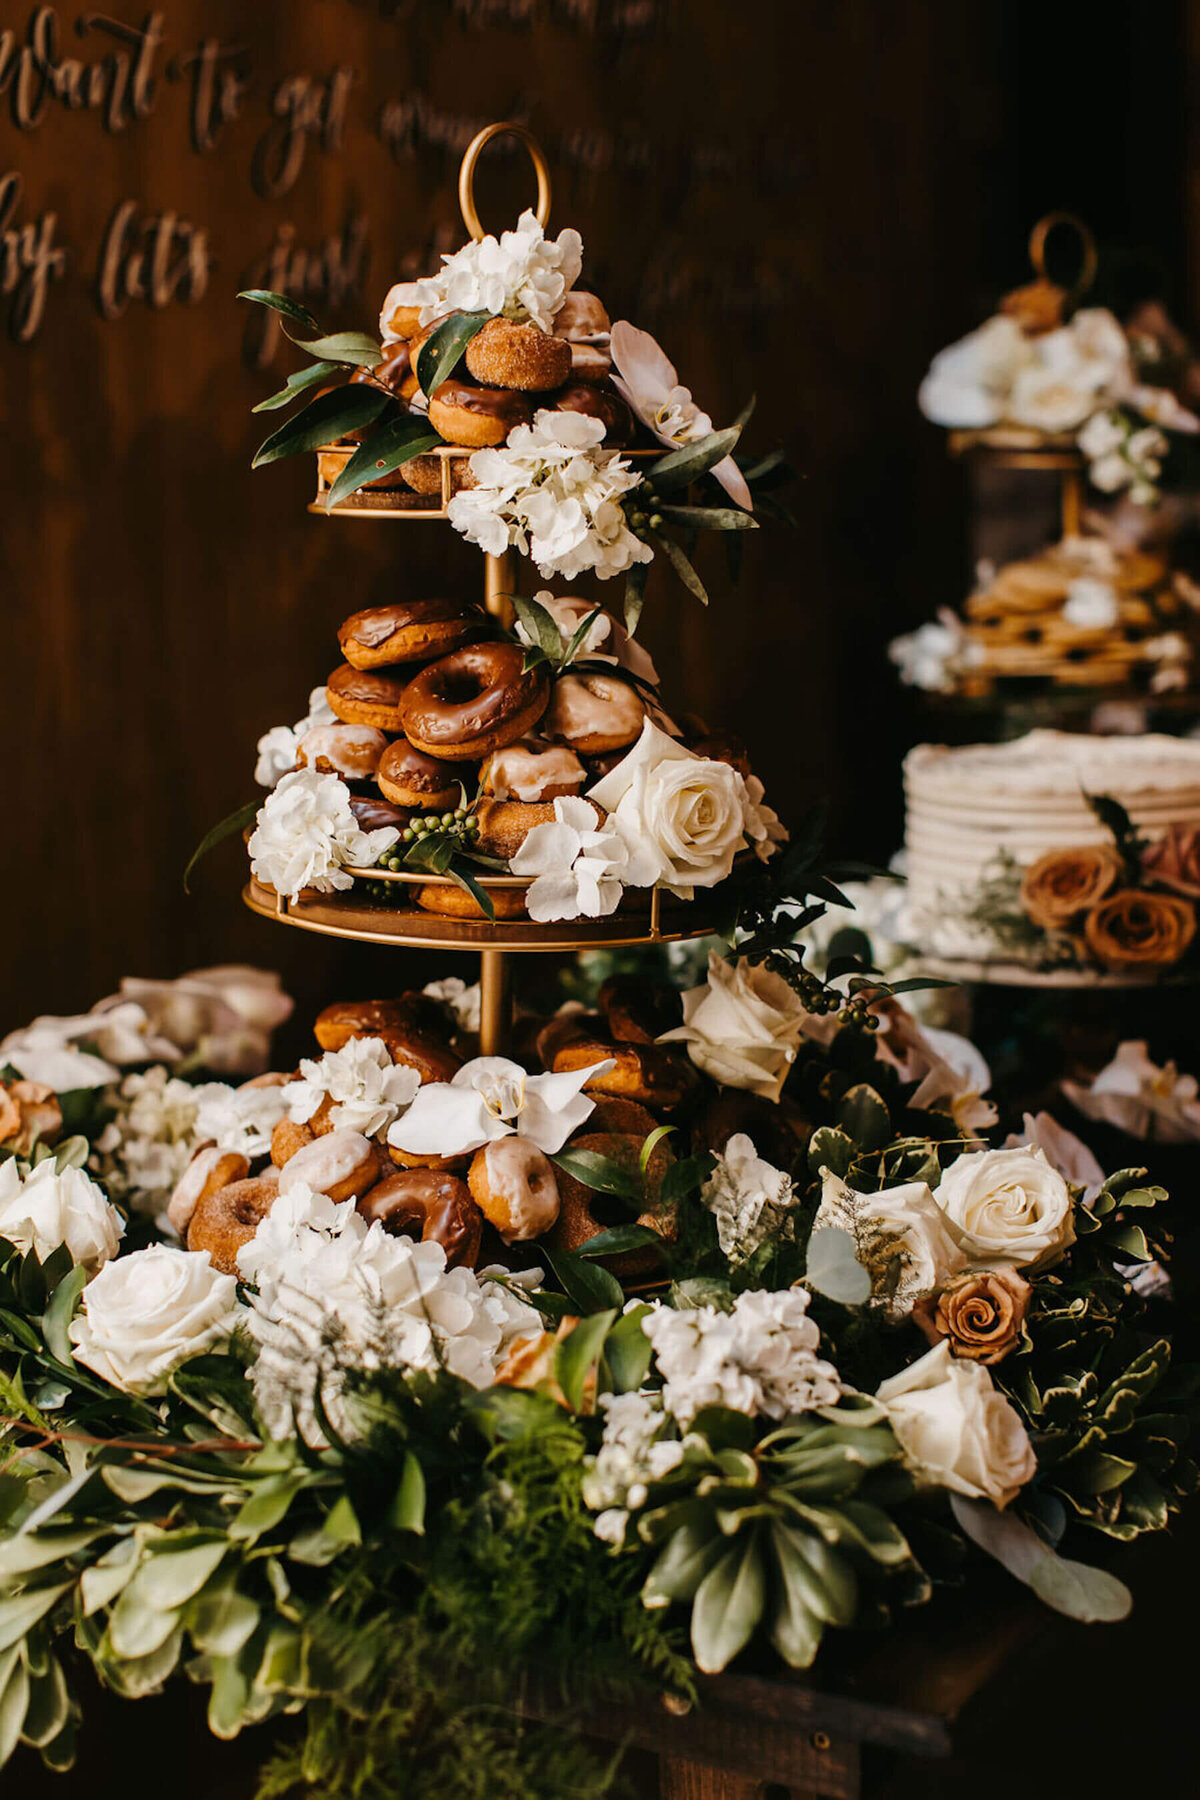 Doughnut dessert display with wedding cakes